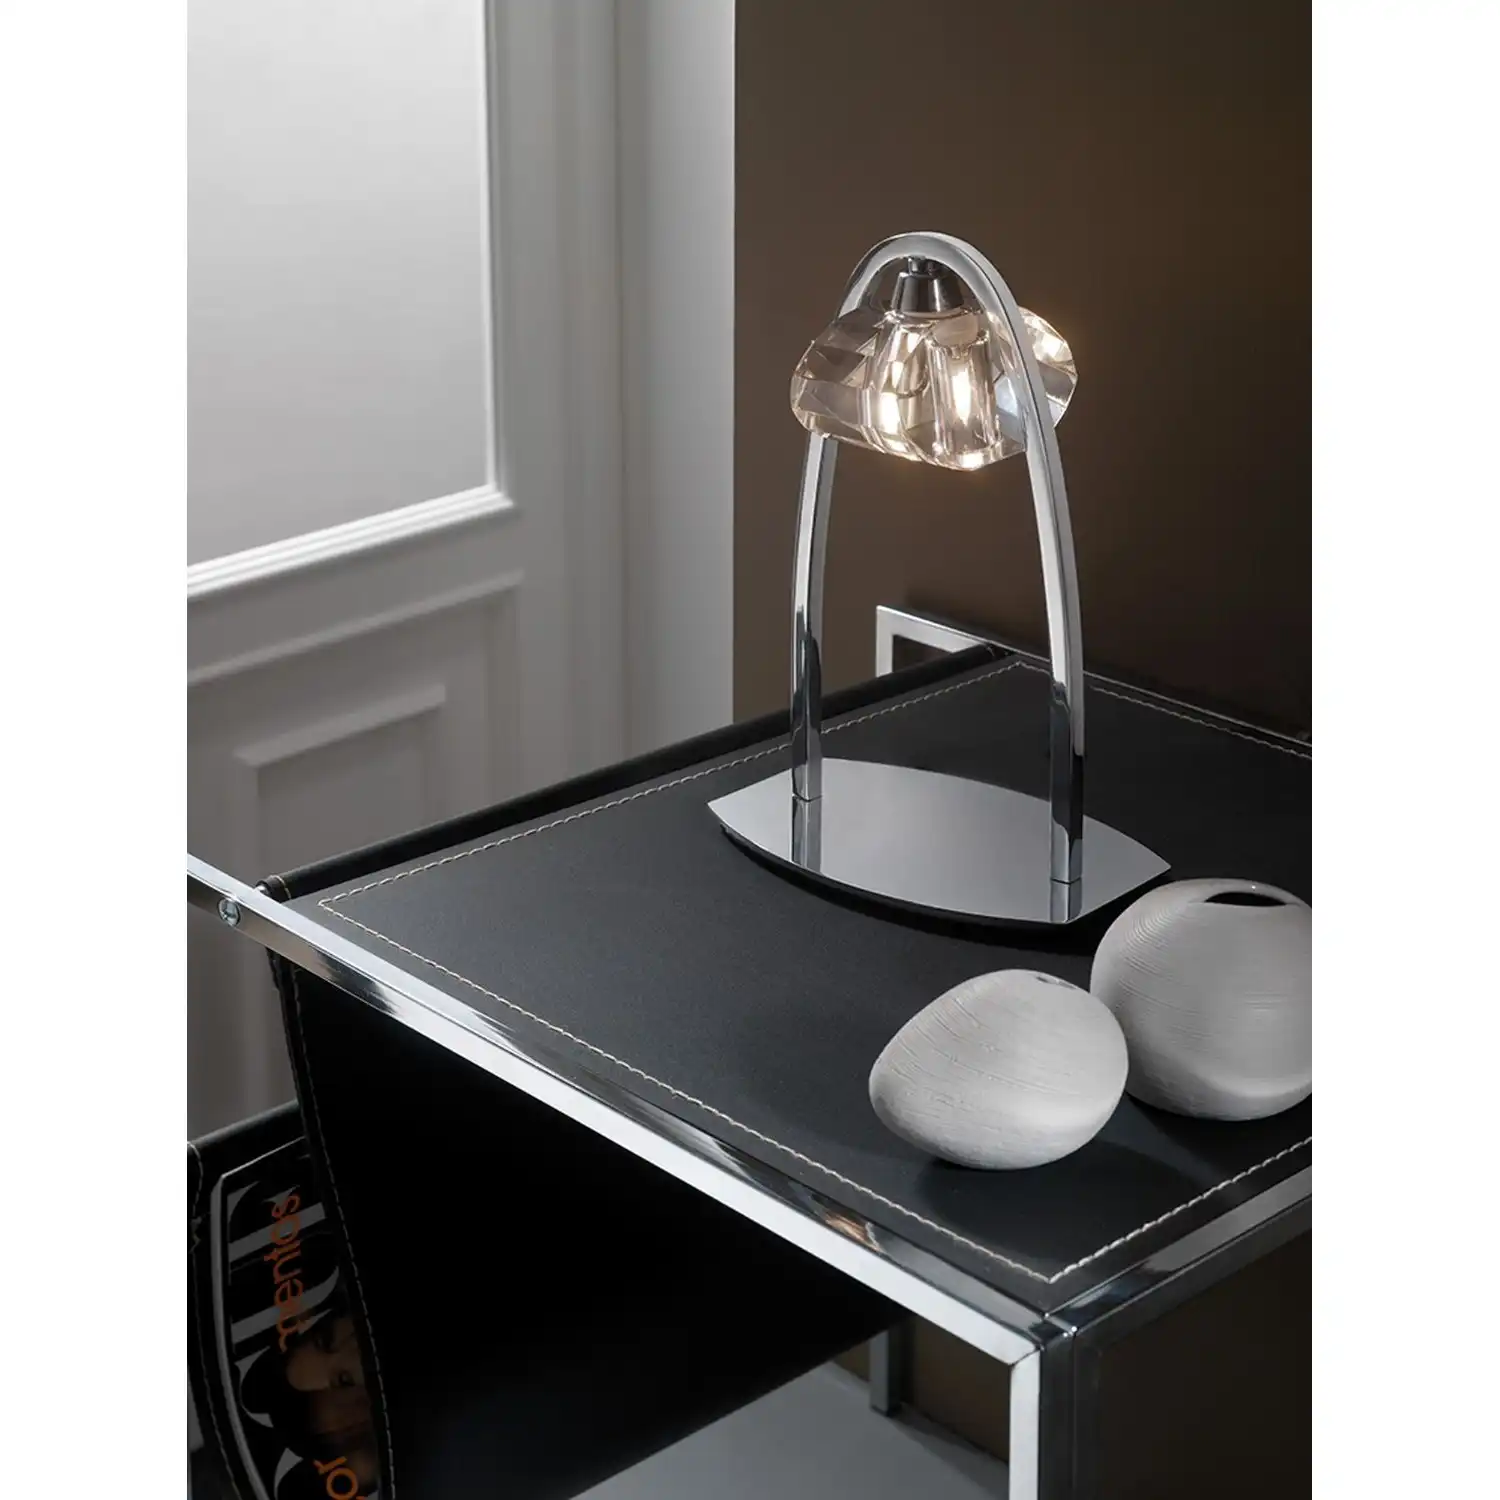 Alfa Large Table Lamp 1 Light G9, Polished Chrome